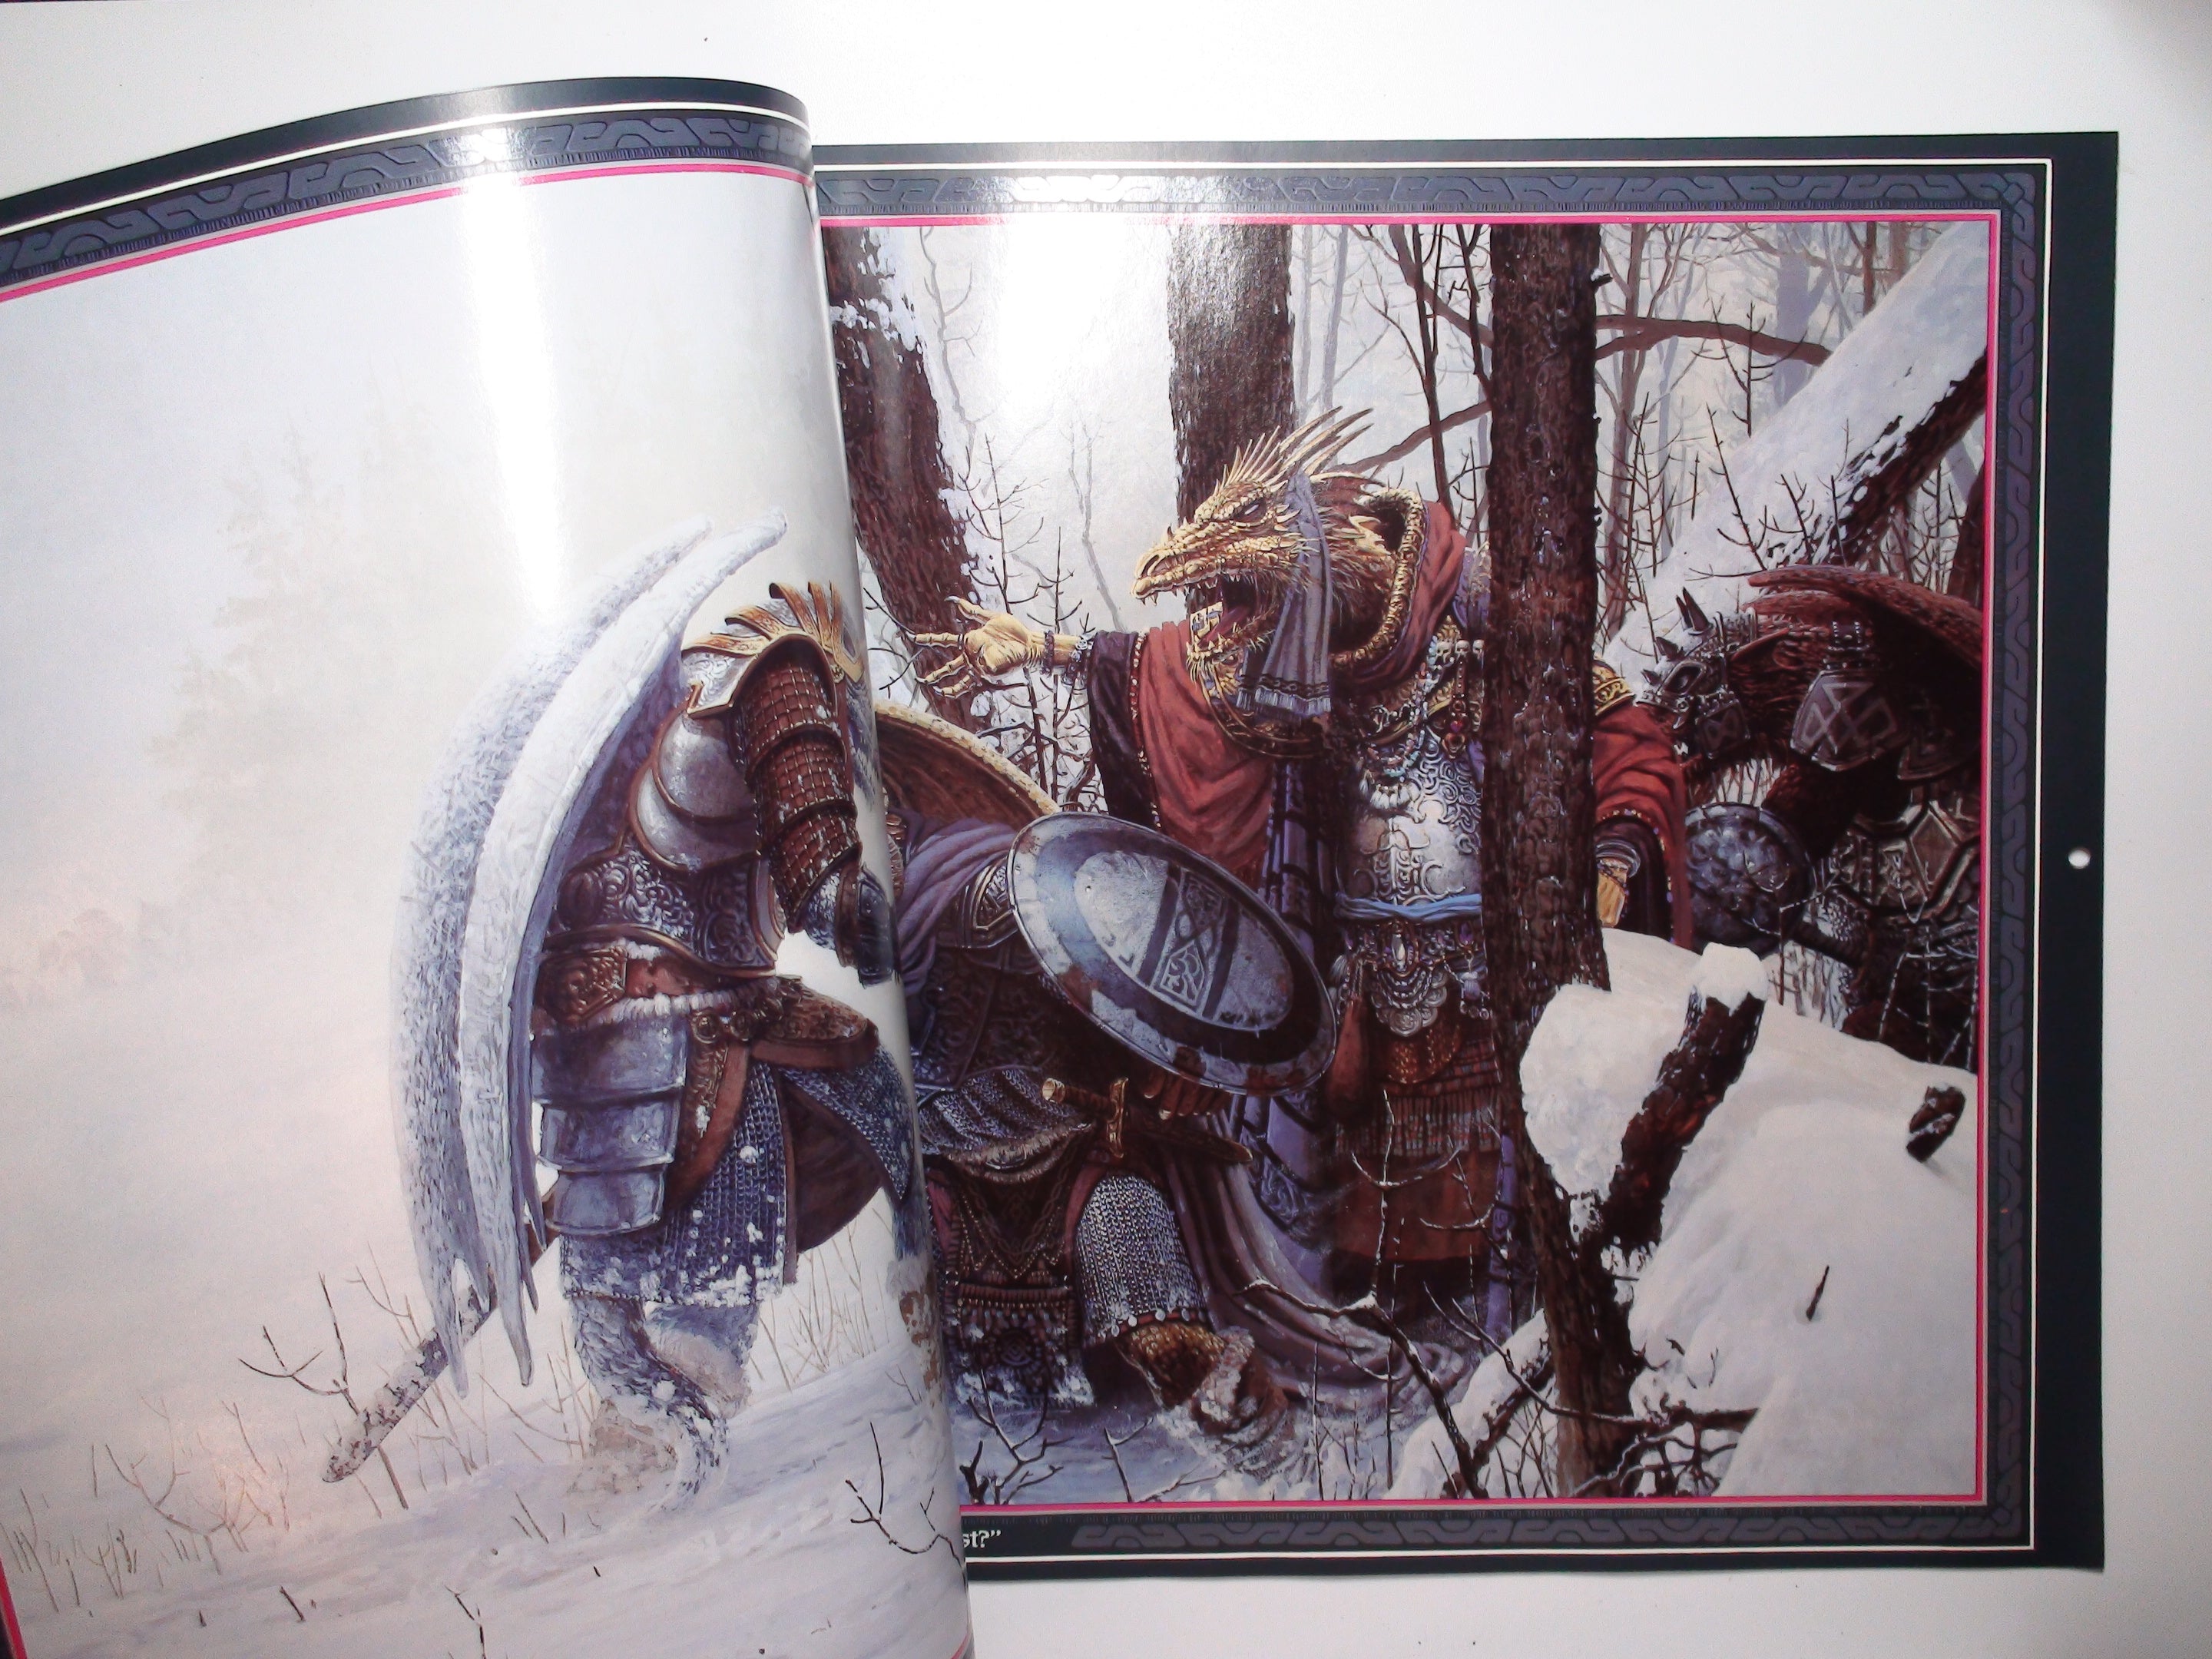 Dragonlance, Dungeons & Dragons 1988 Fantasy Calendar, Collectible